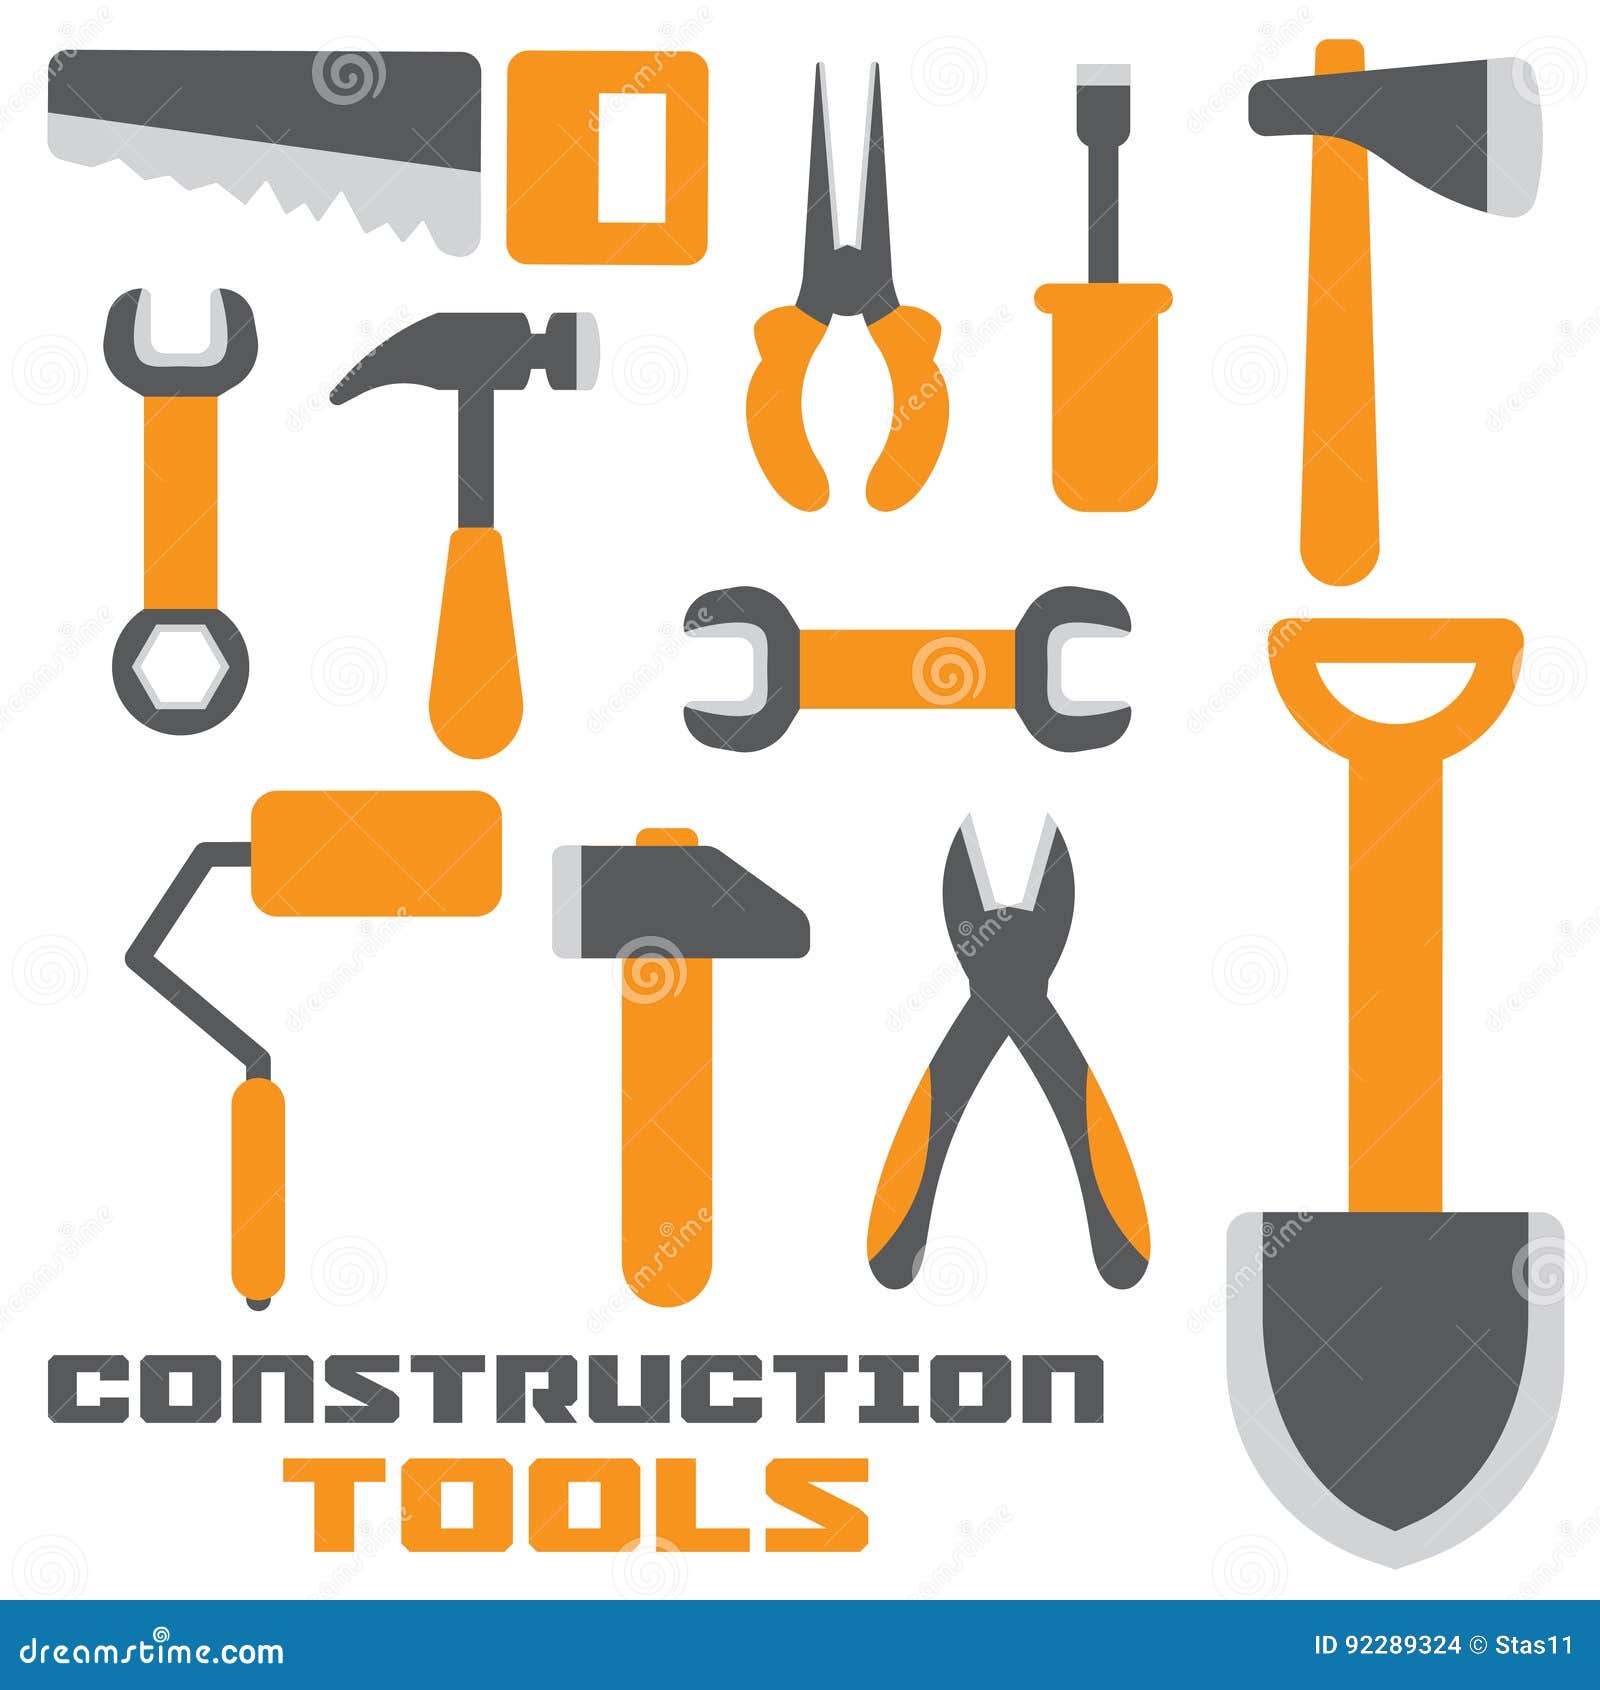 Download Construction Tools Elements In A Flat Design. Vector ...